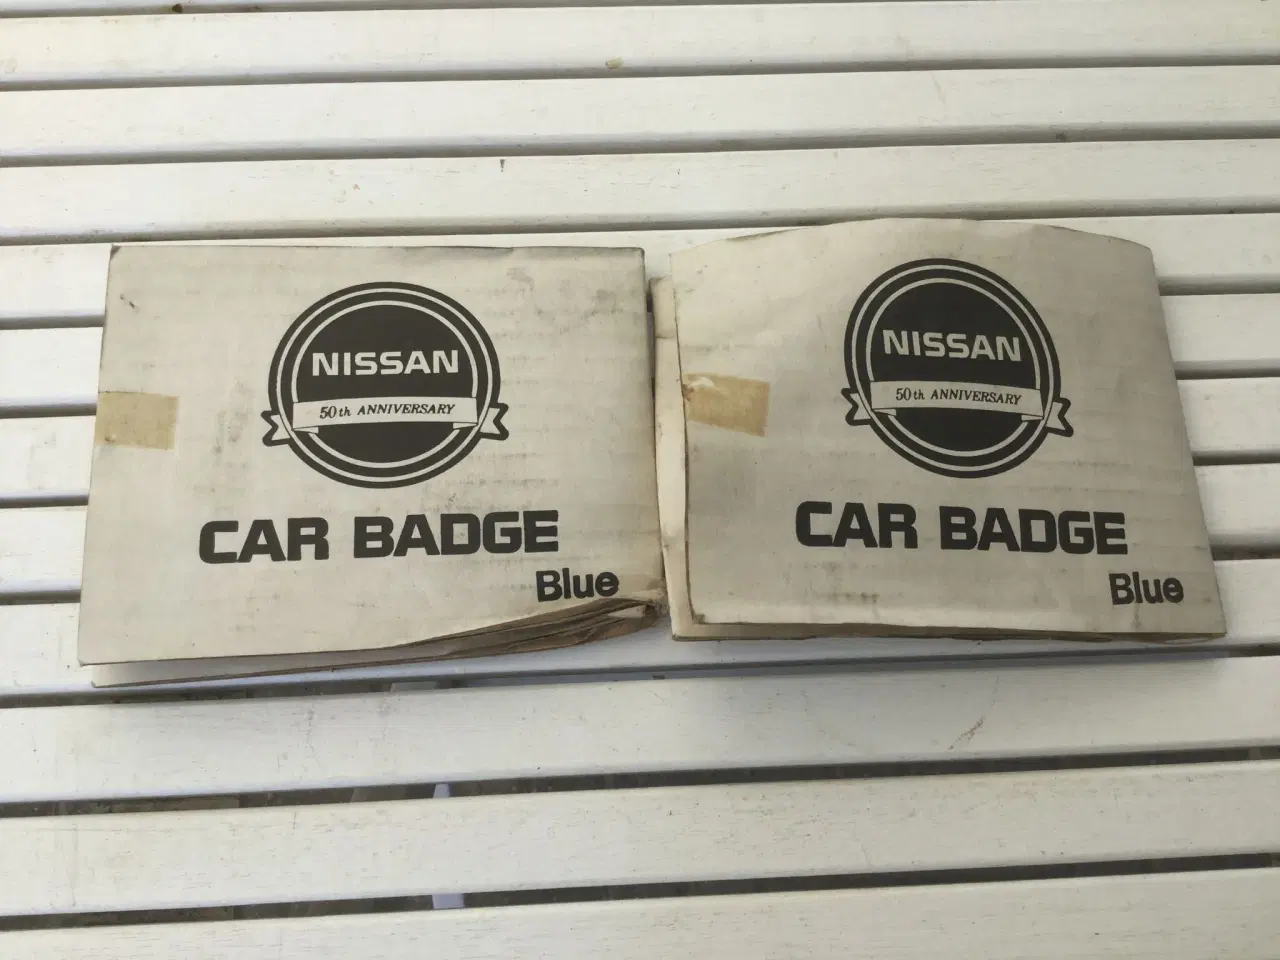 Billede 1 - Nissan skilte retro